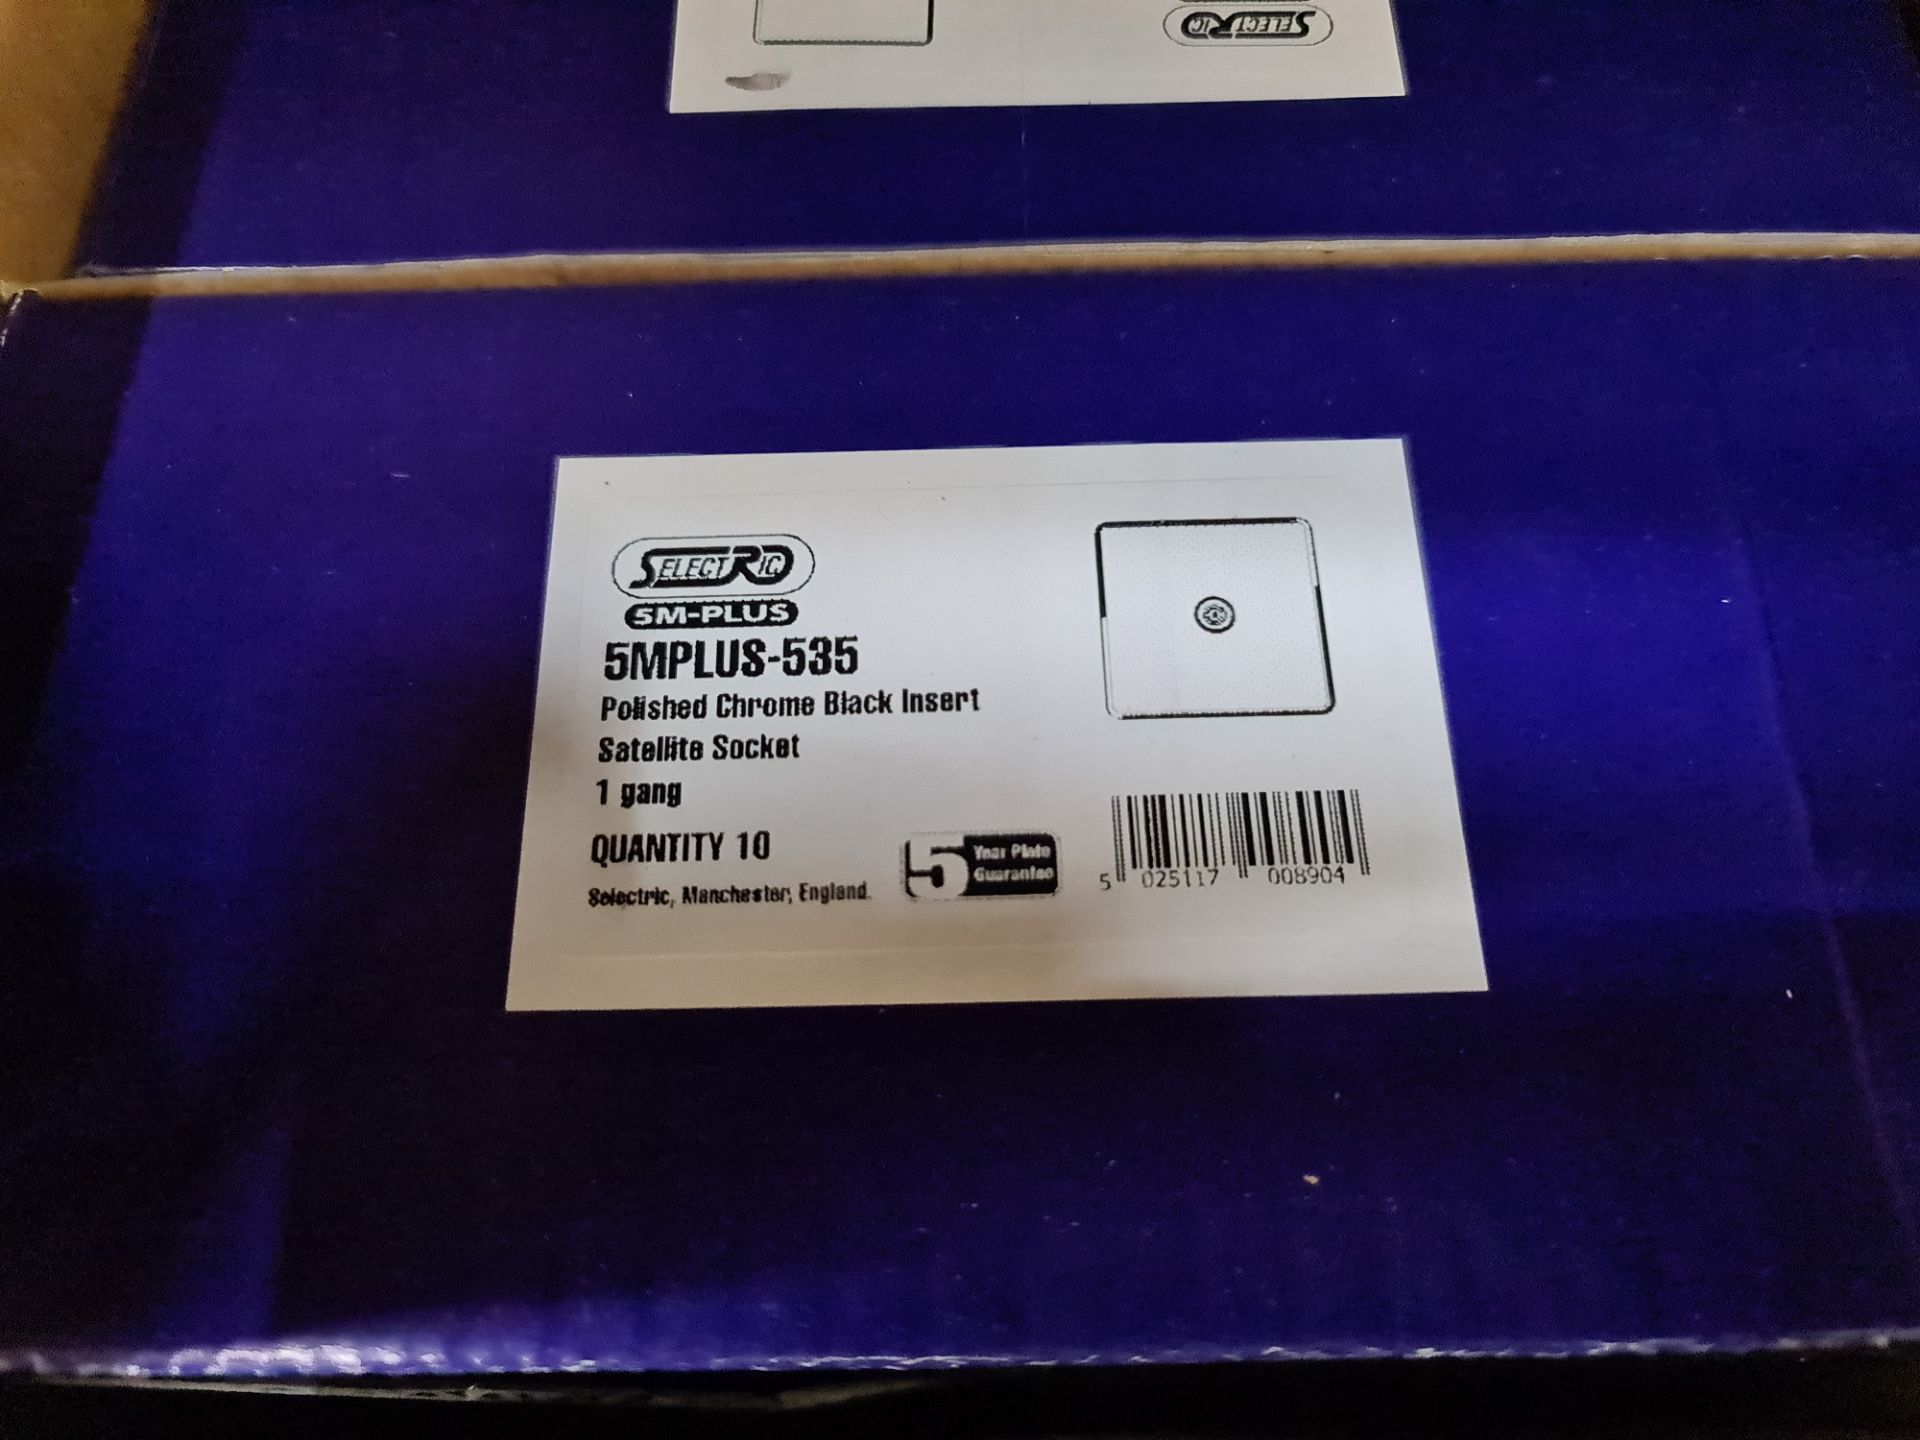 50 off (1 carton) Selectric 5M-PLUS 535 polished chrome 1 gang satellite socket - black insert